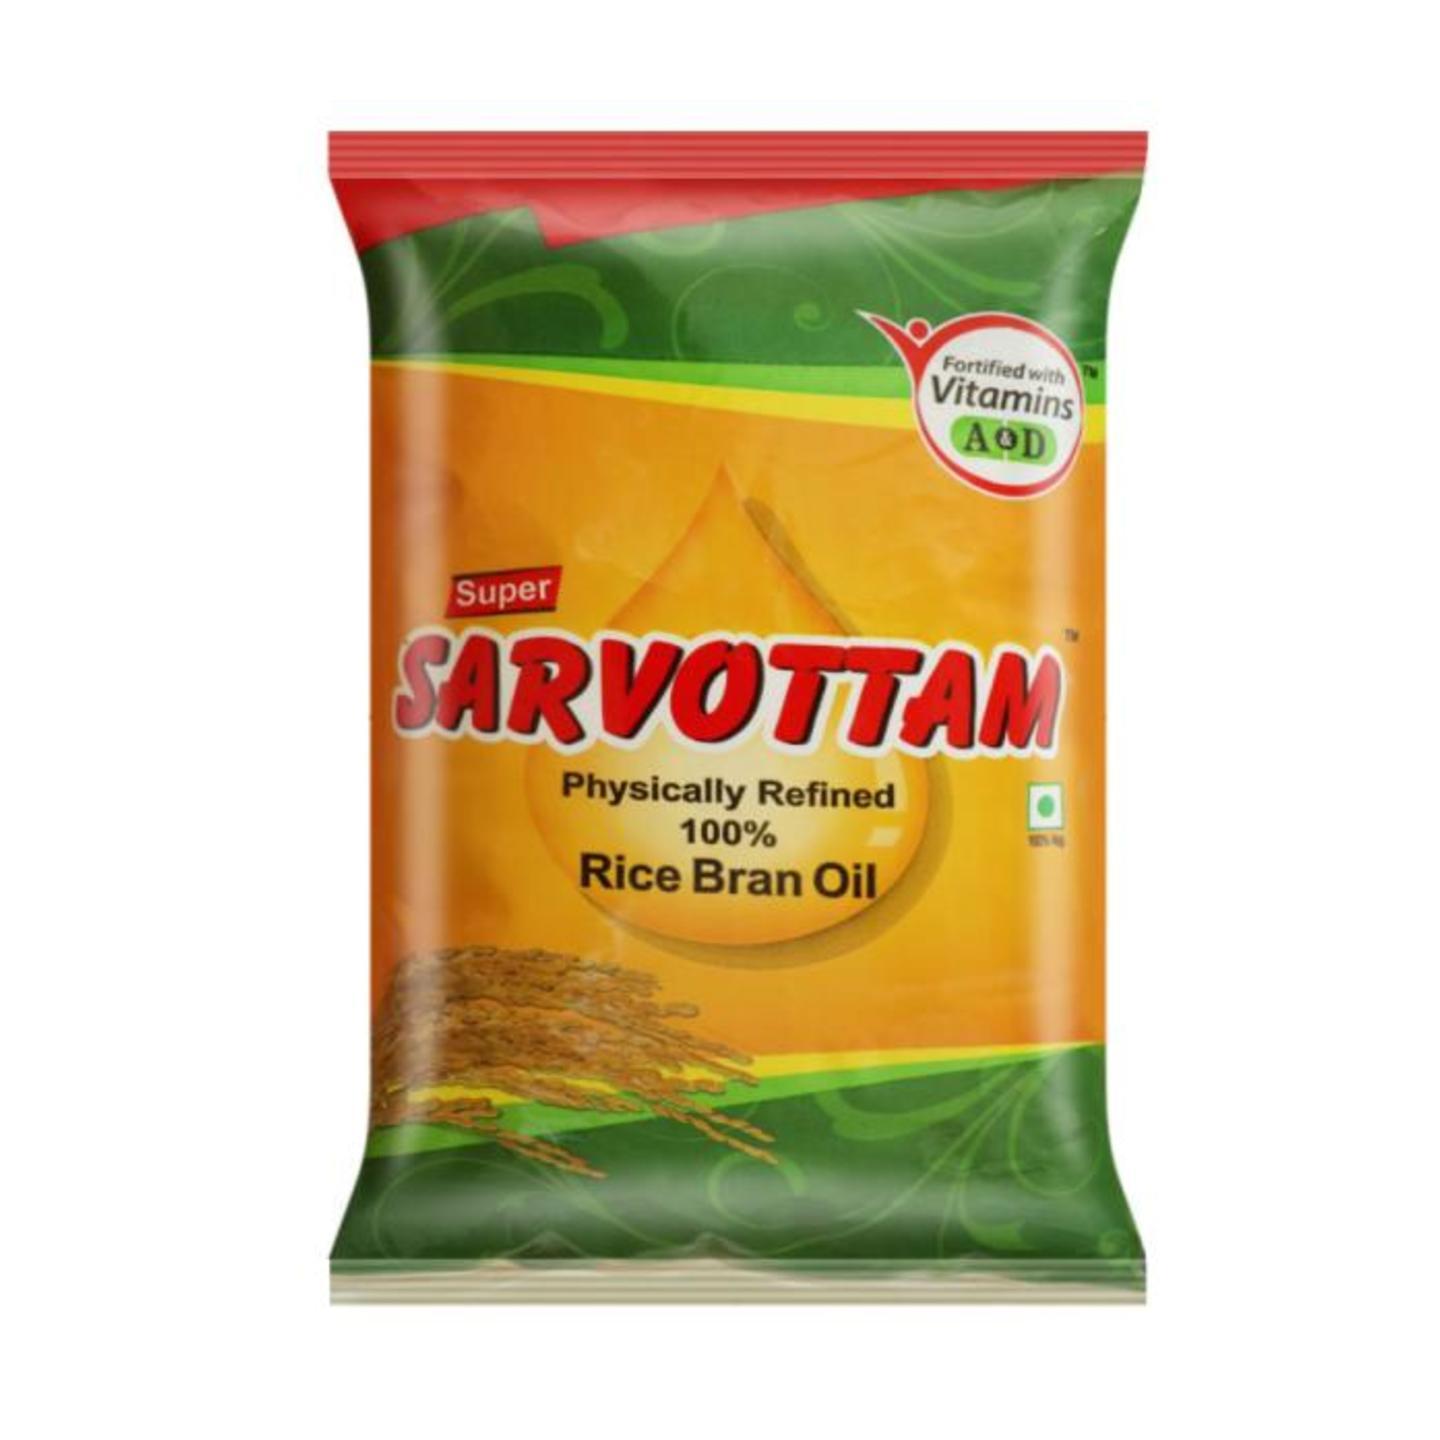 Super Sarvottam Physically Refined 100 Rice Bran Oil 1 L